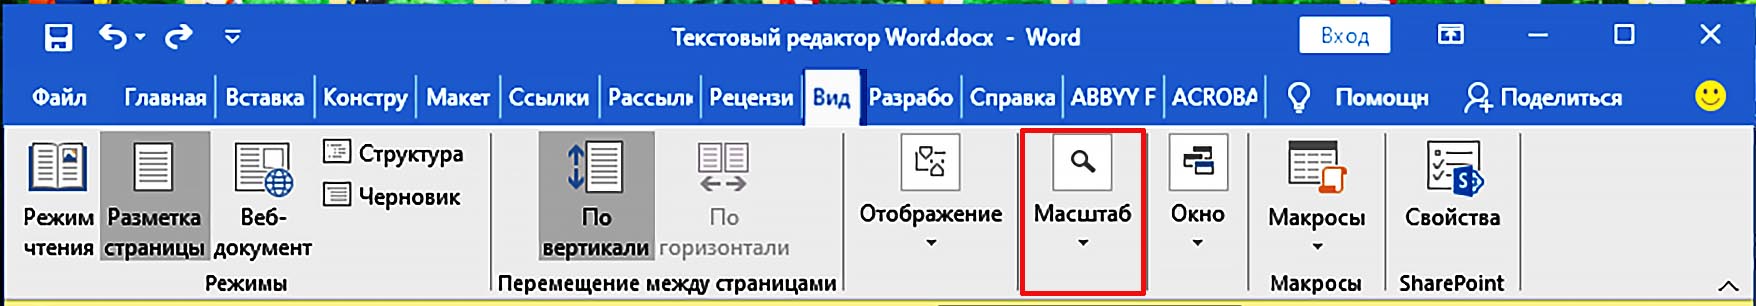  tekstovyj-redaktor-word-instrukciya_13.jpg 